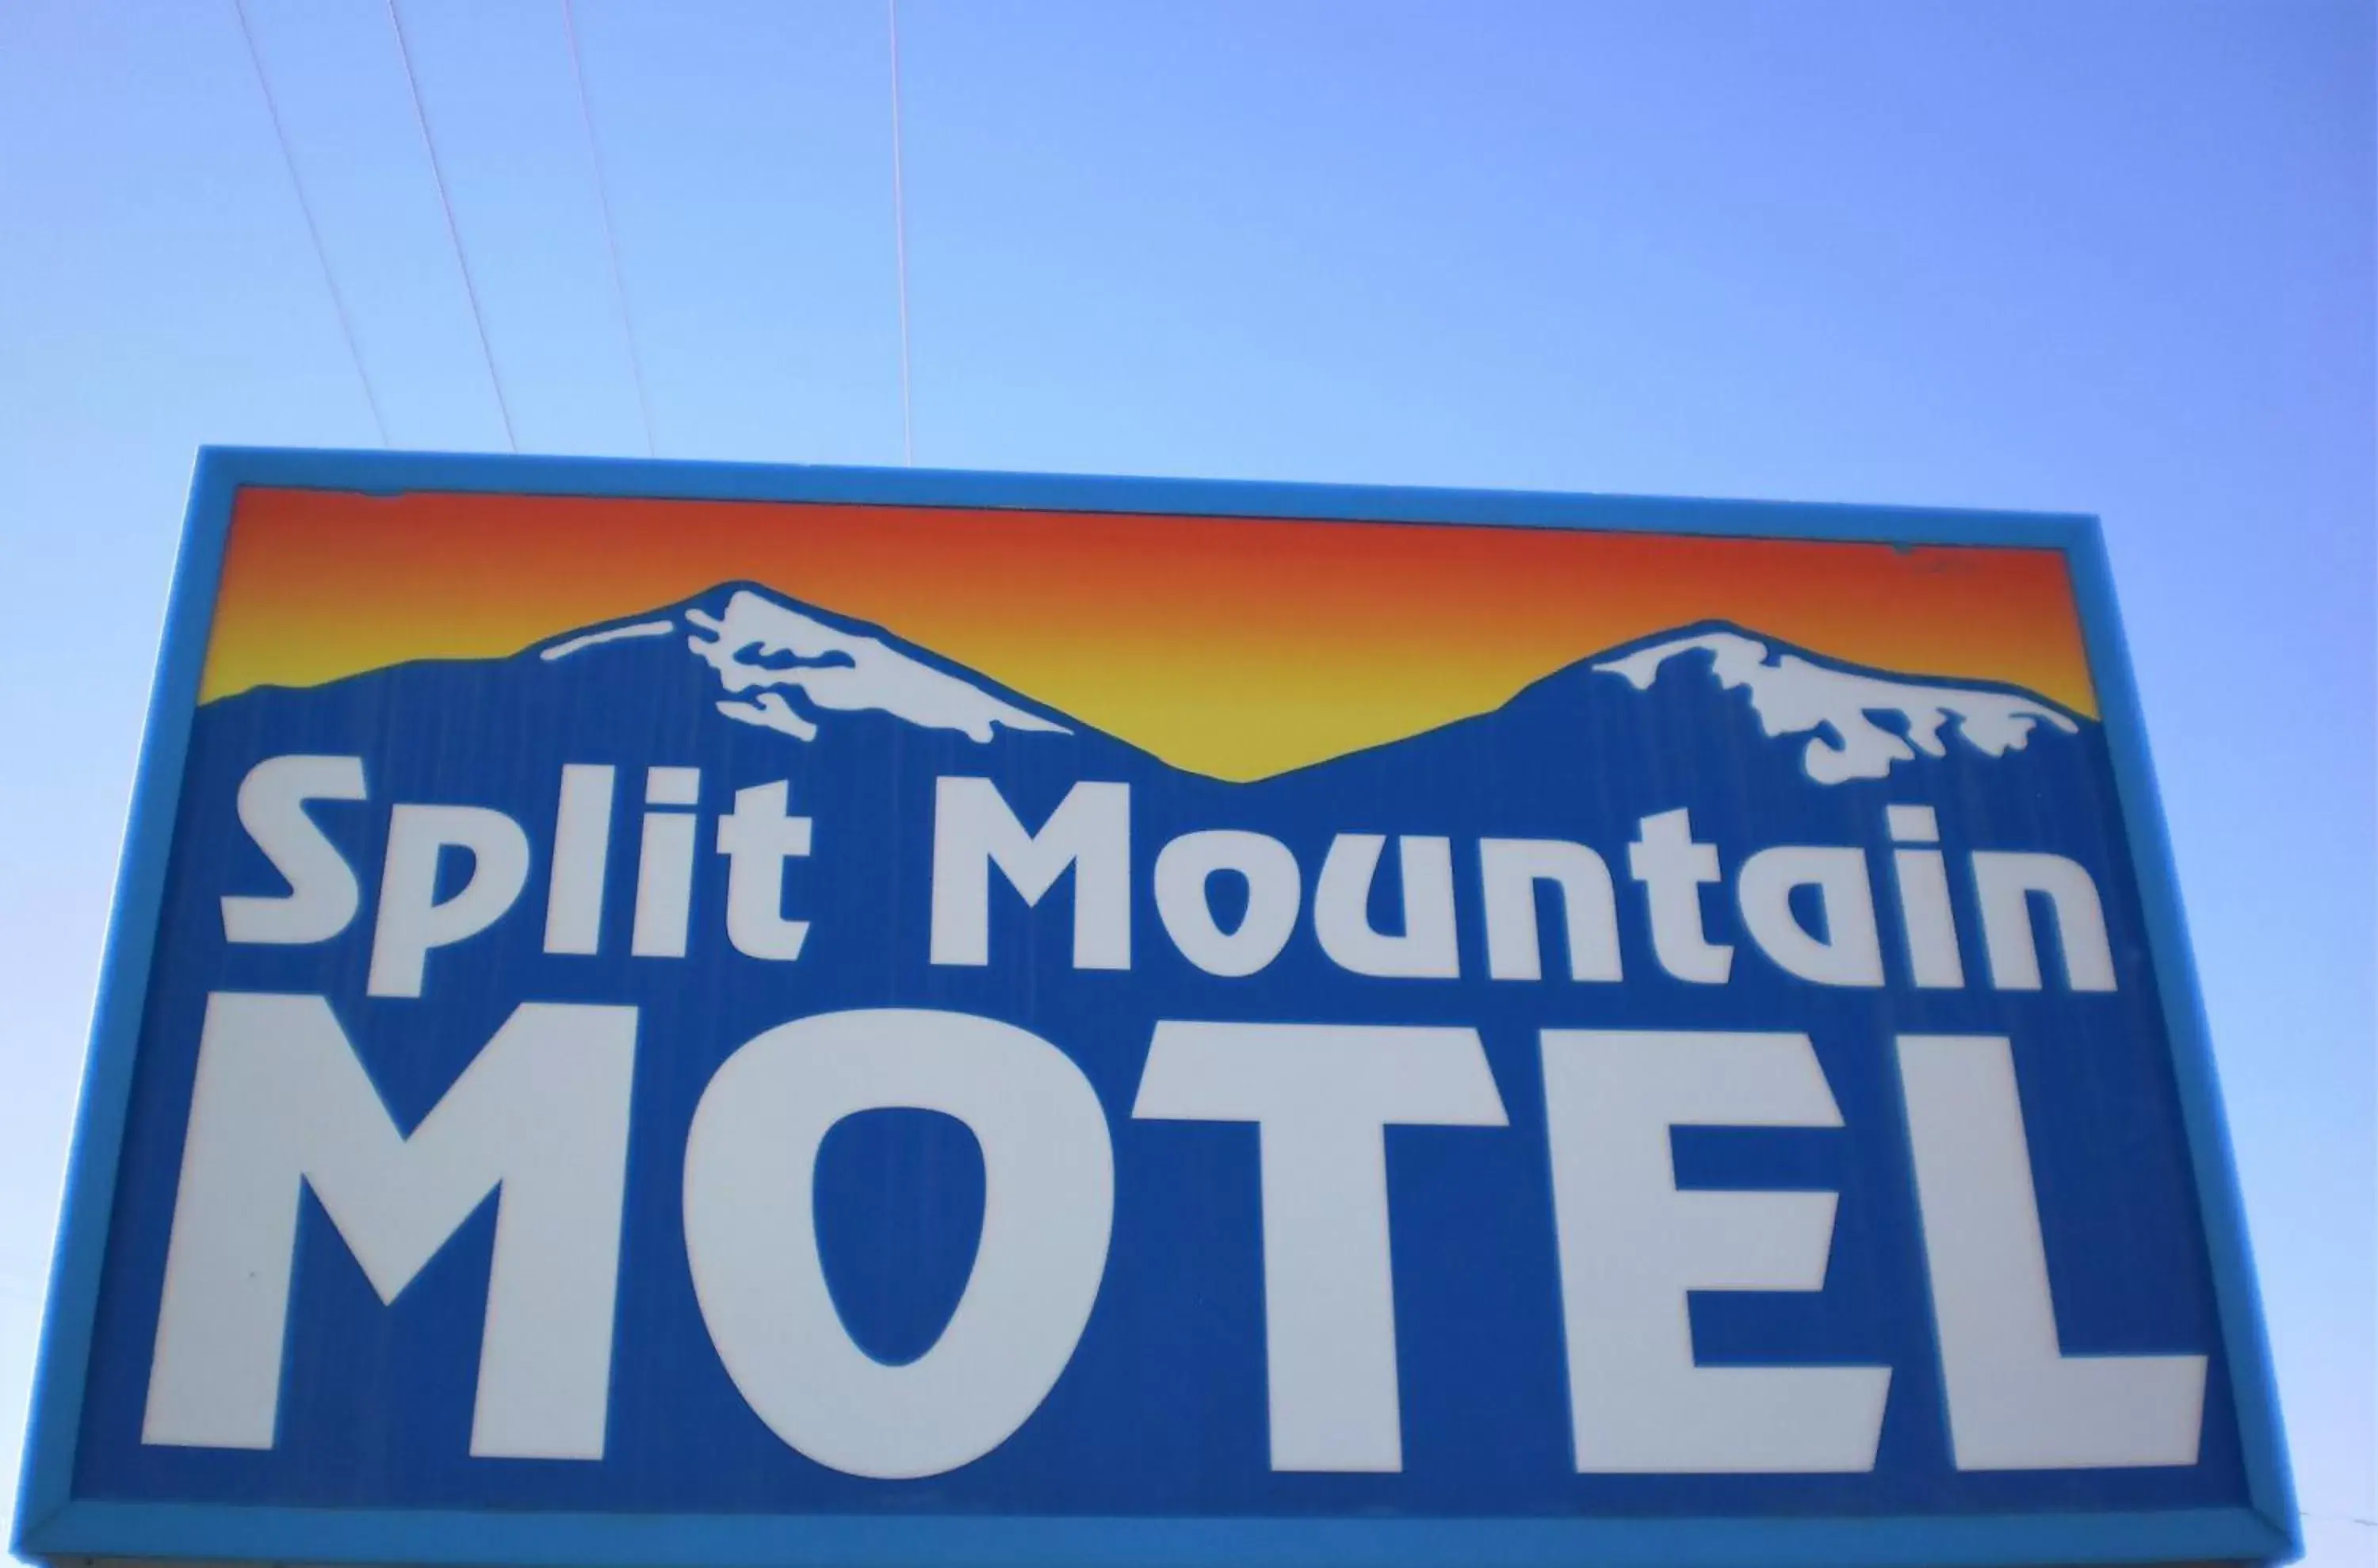 Property logo or sign, Logo/Certificate/Sign/Award in Split Mountain Motel